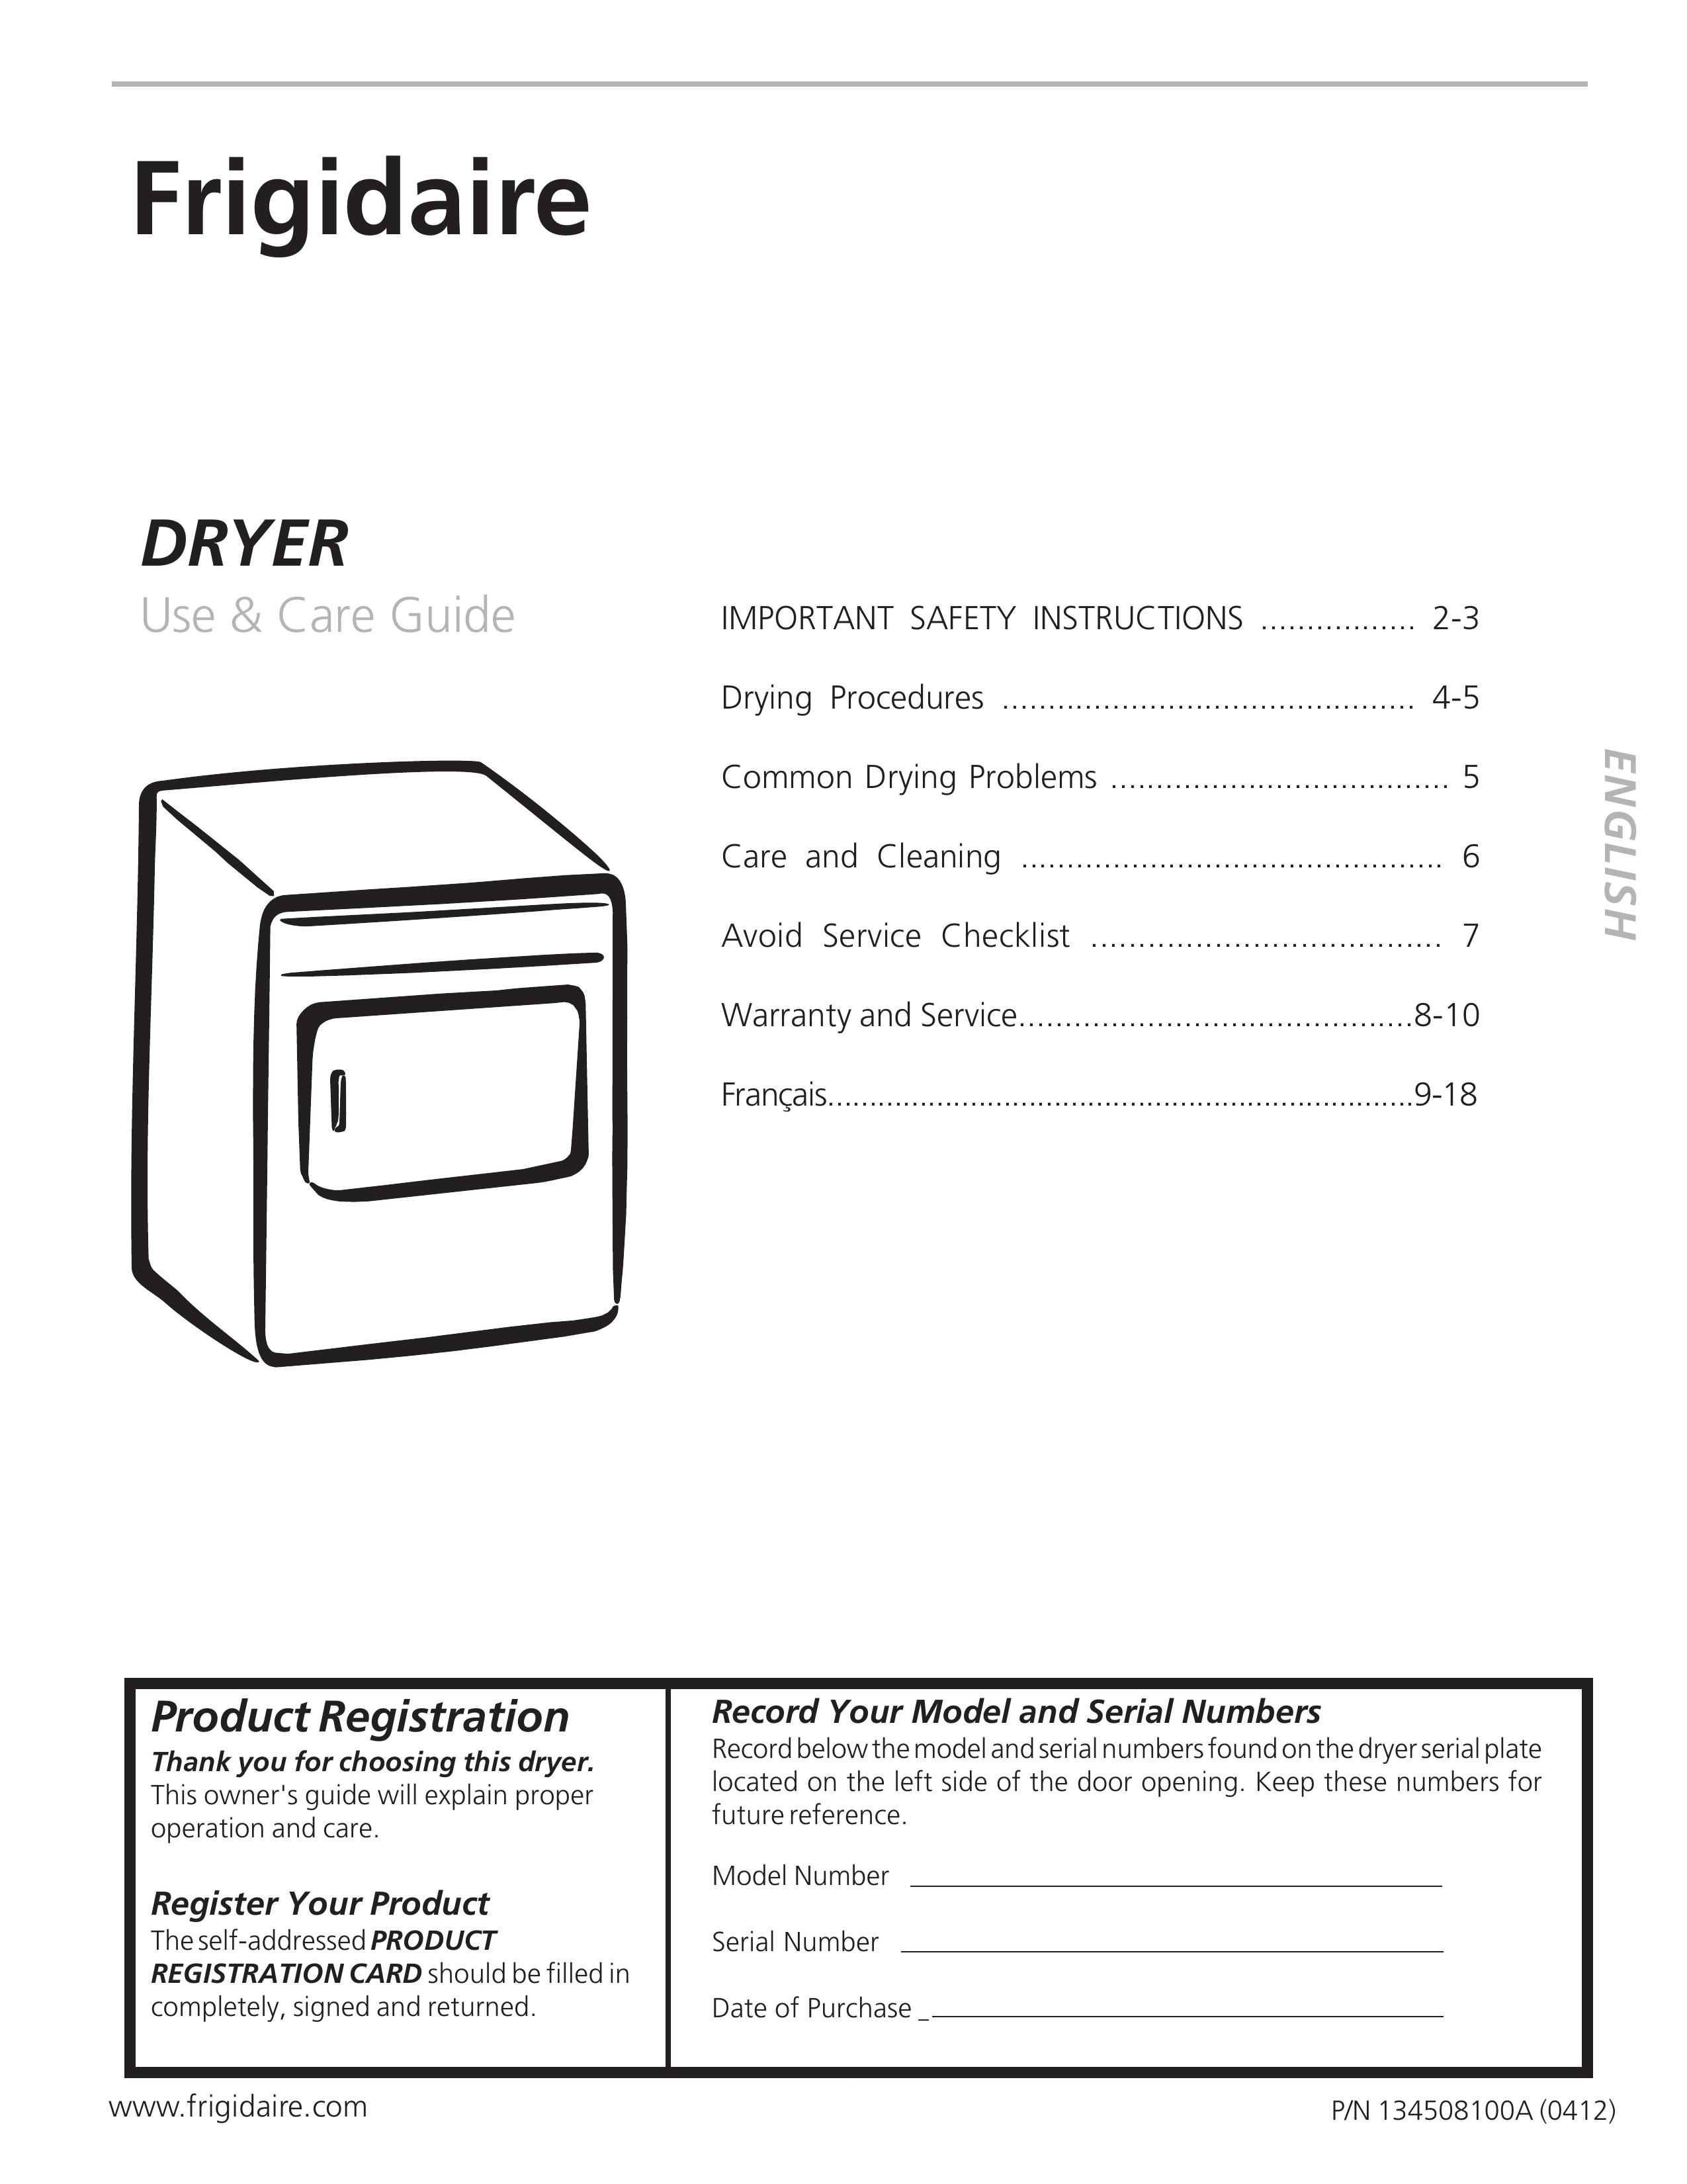 Frigidaire 134508100A Clothes Dryer User Manual